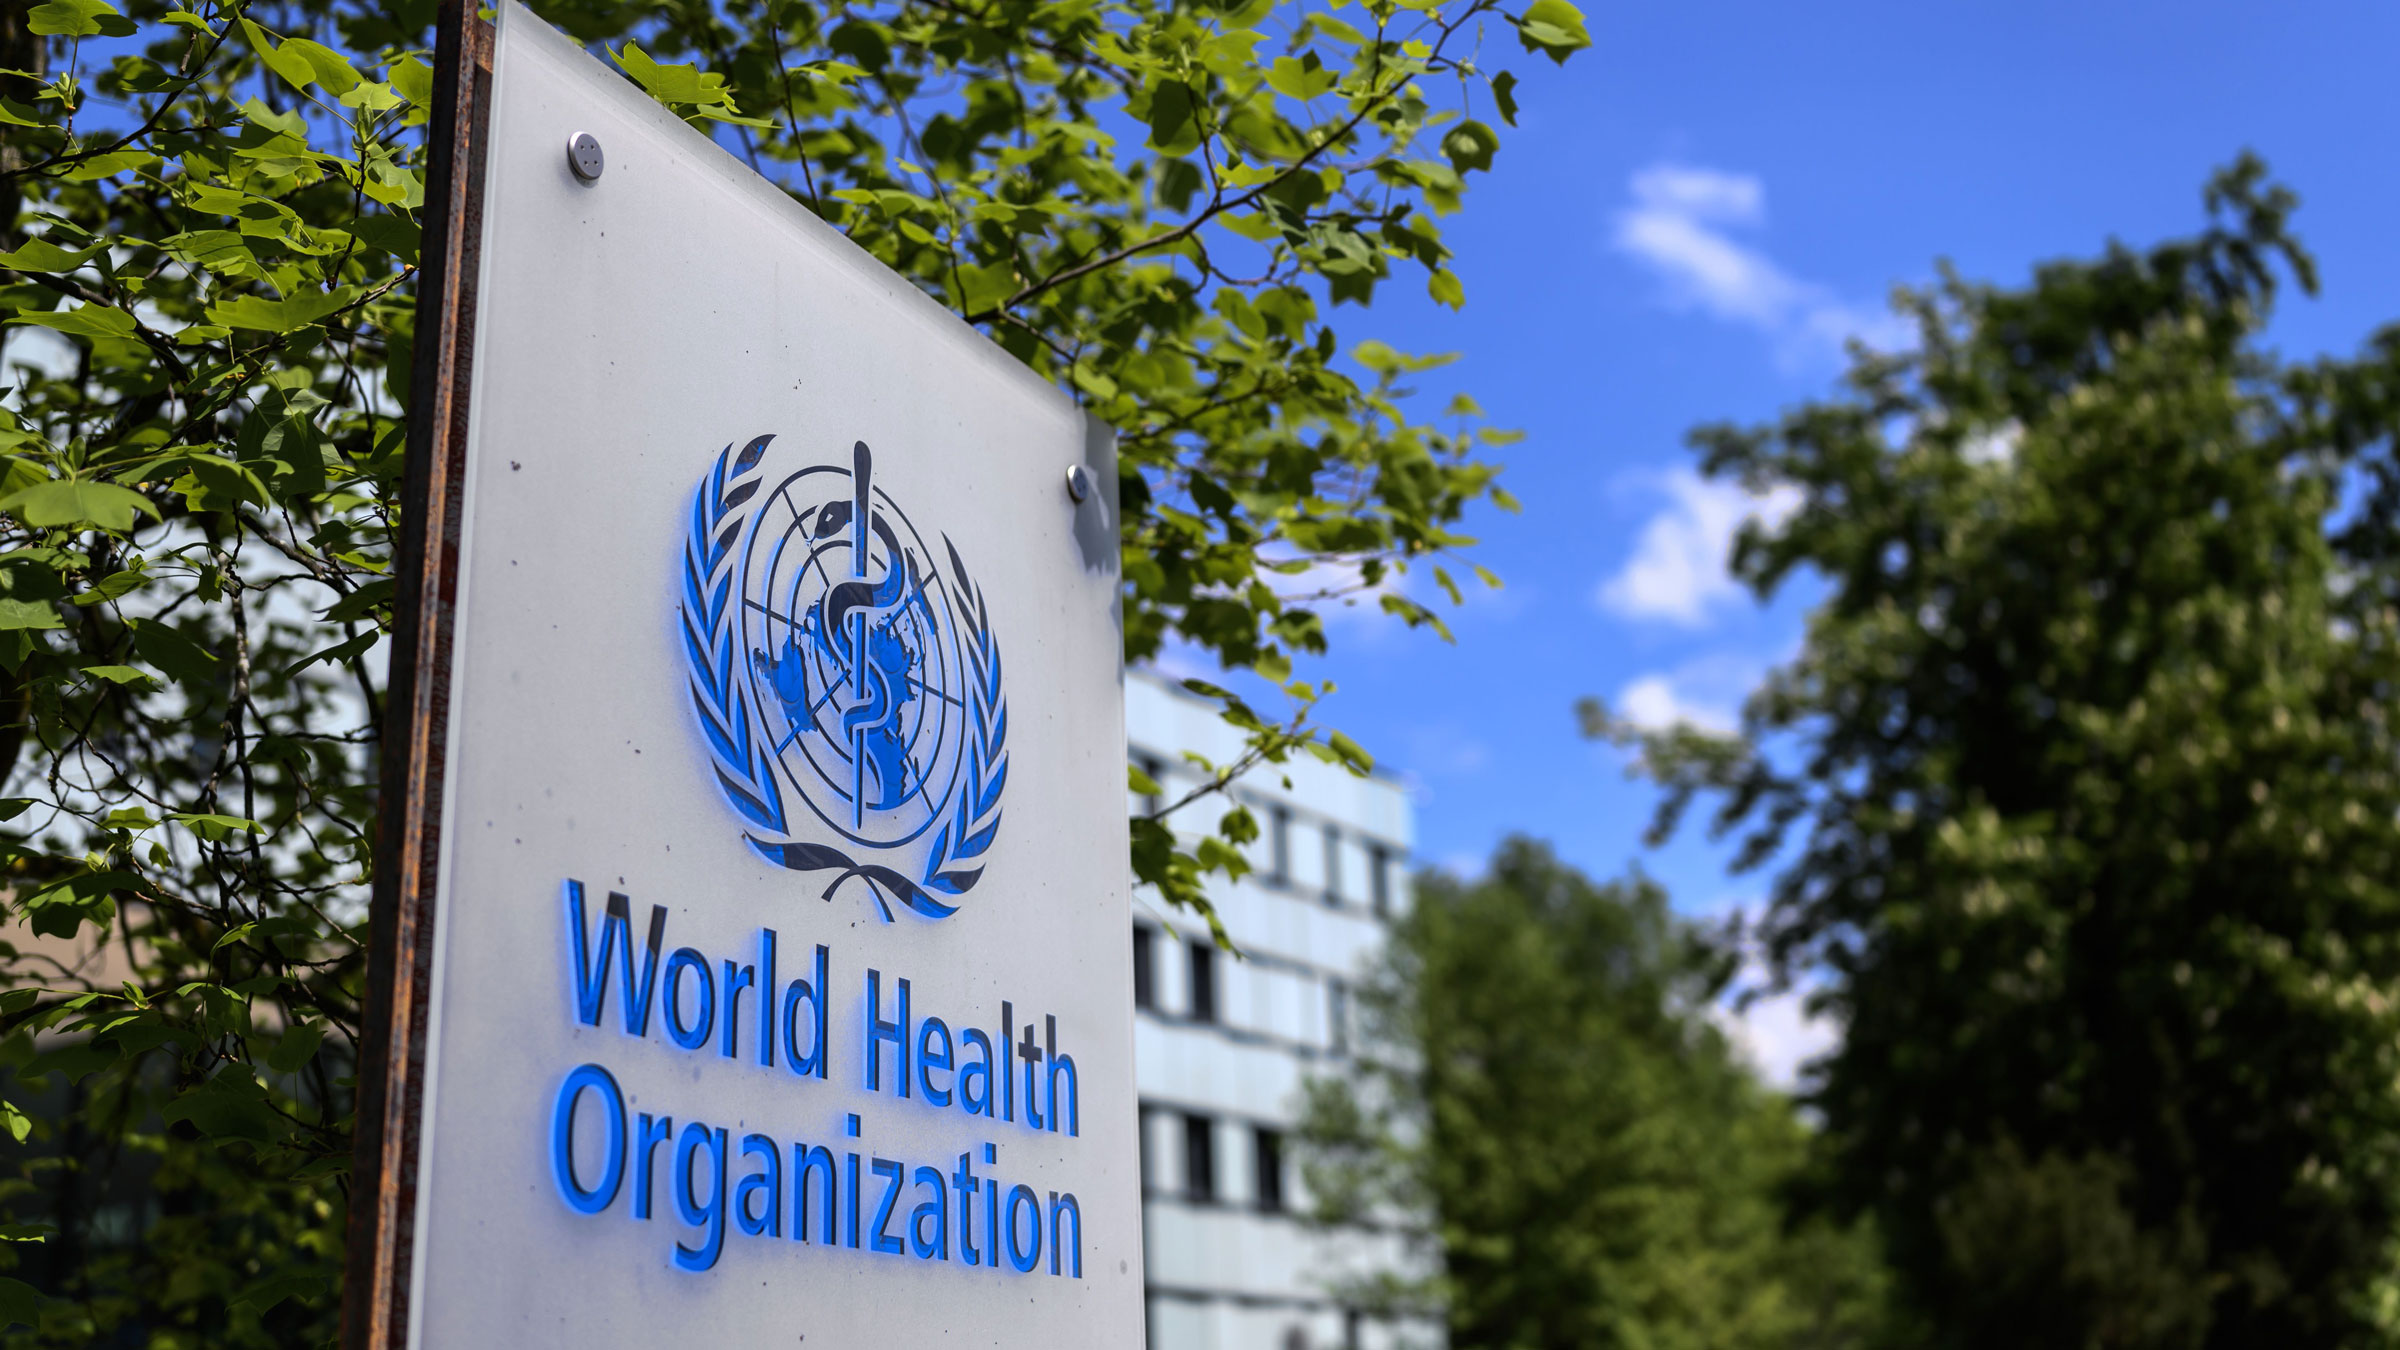 The World Health Organization is headquartered in Geneva, Switzerland.